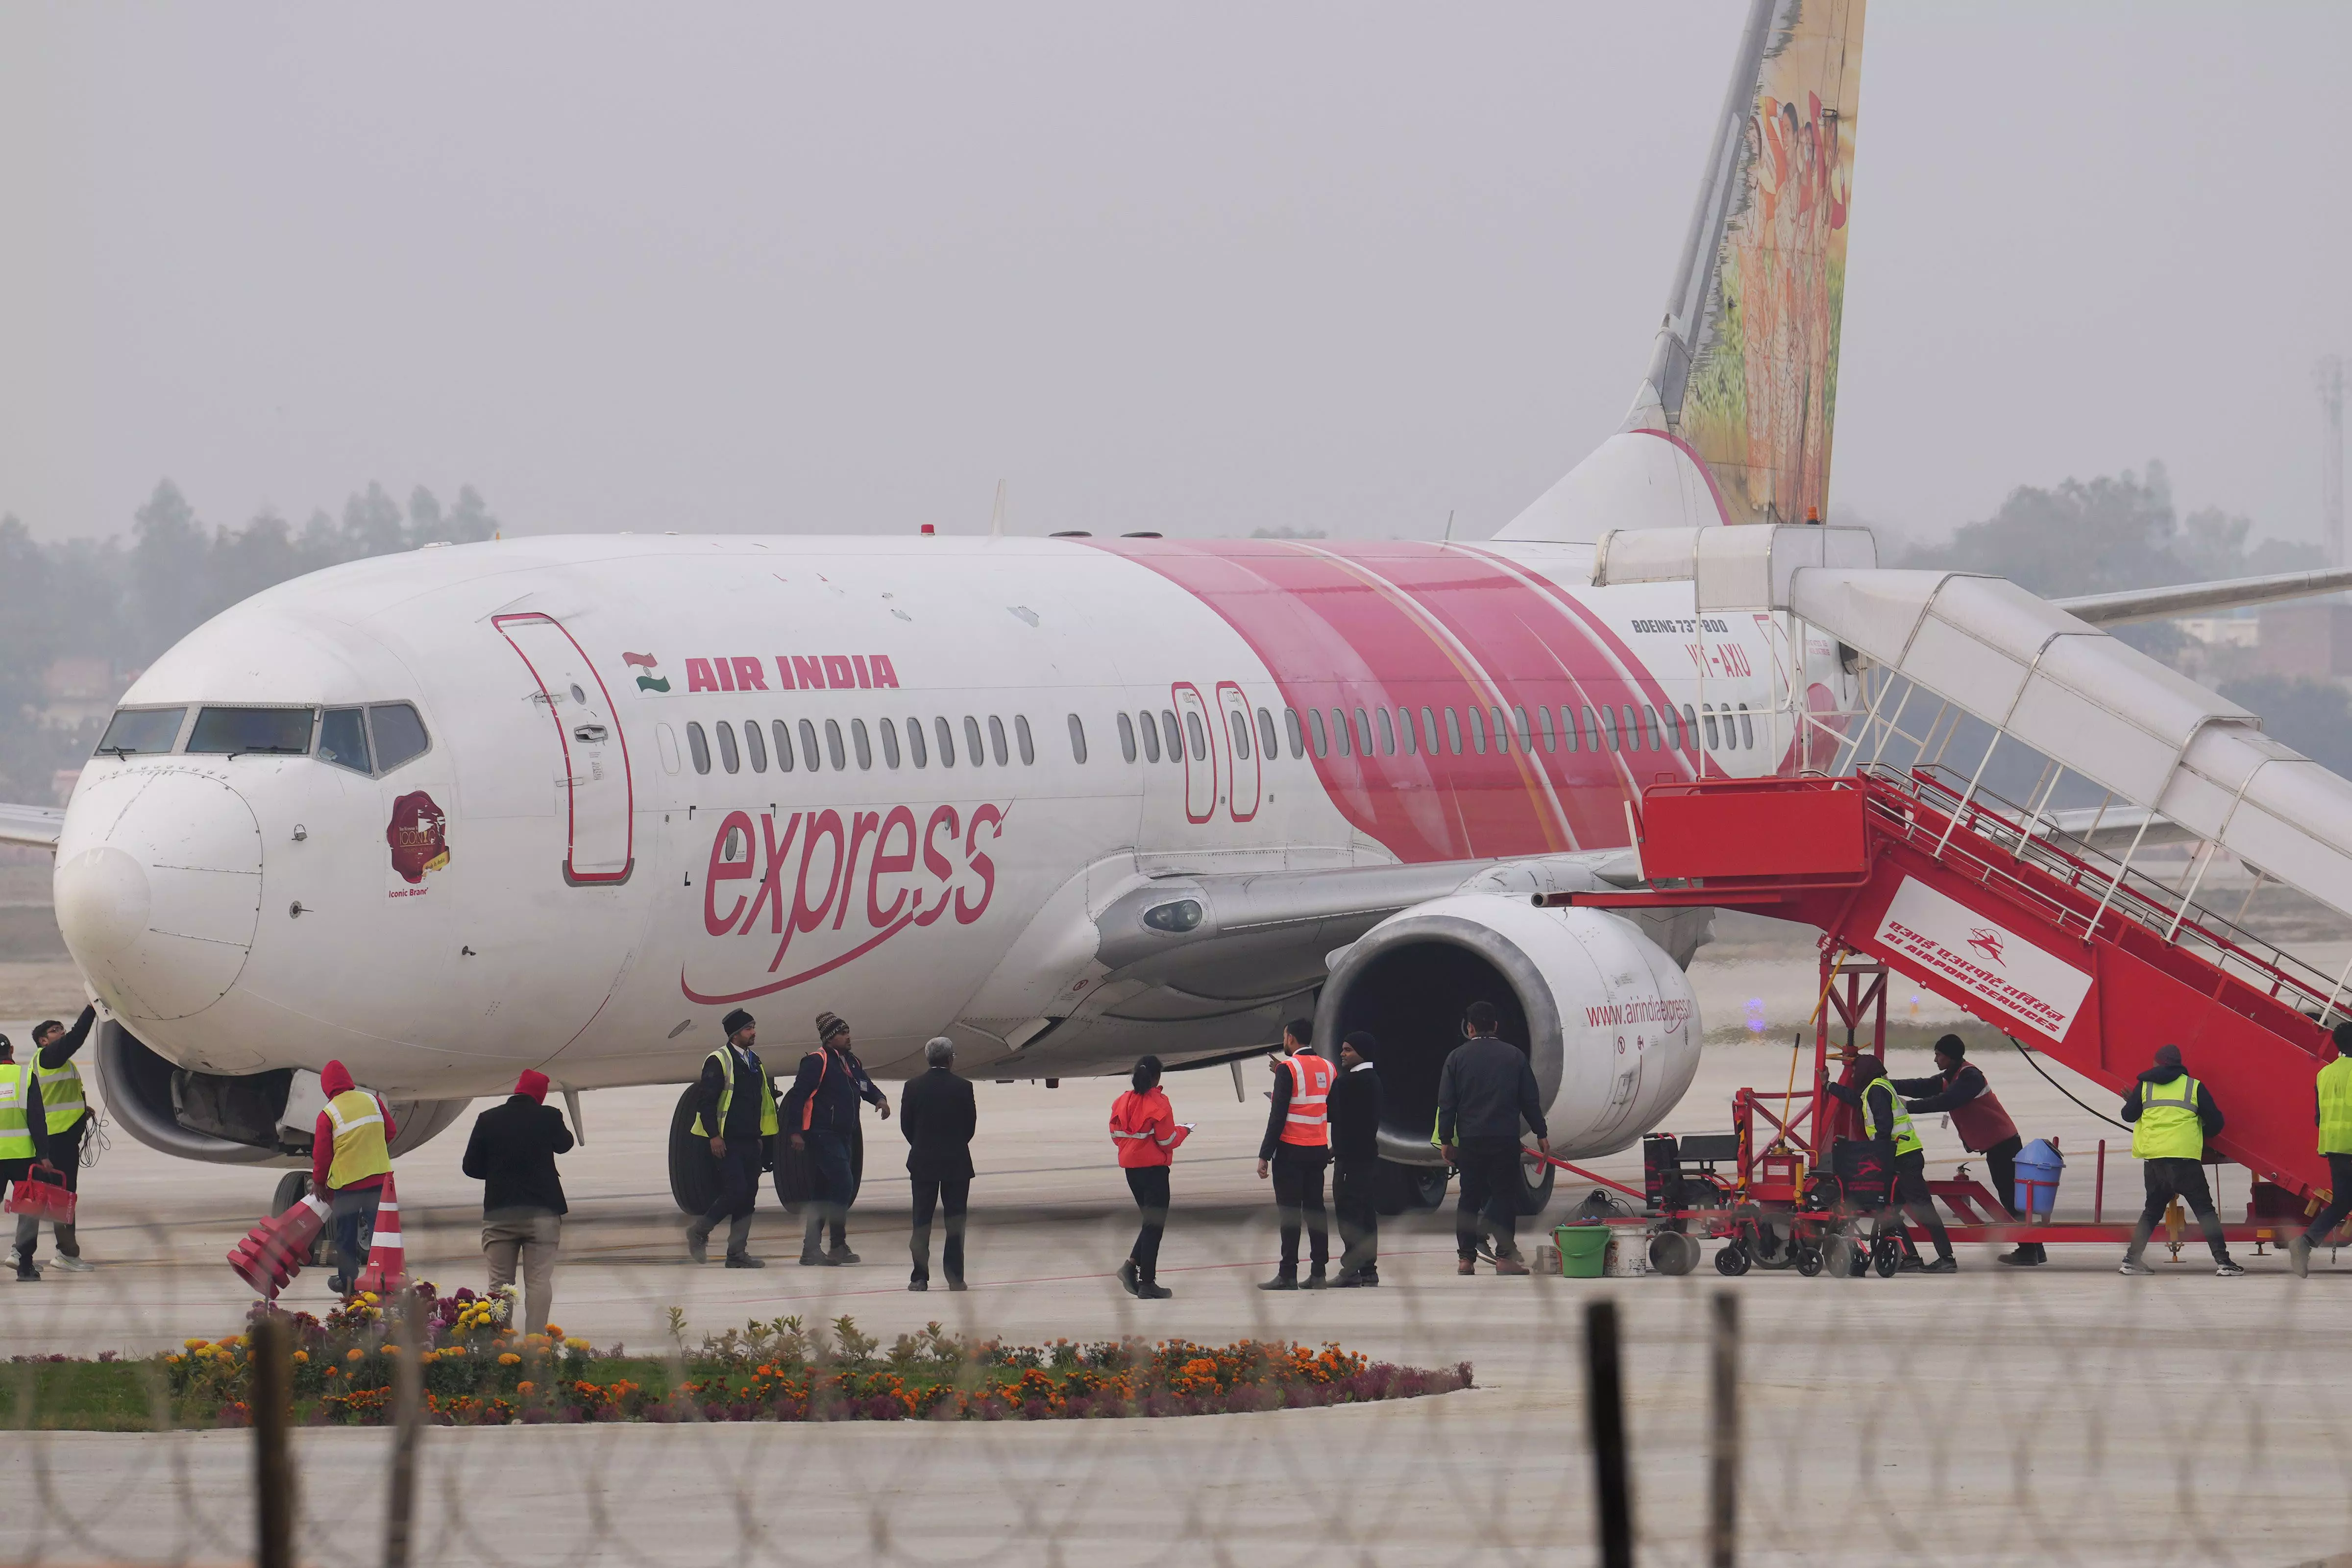 Cabin crew strike: Air India Express fires 25 members